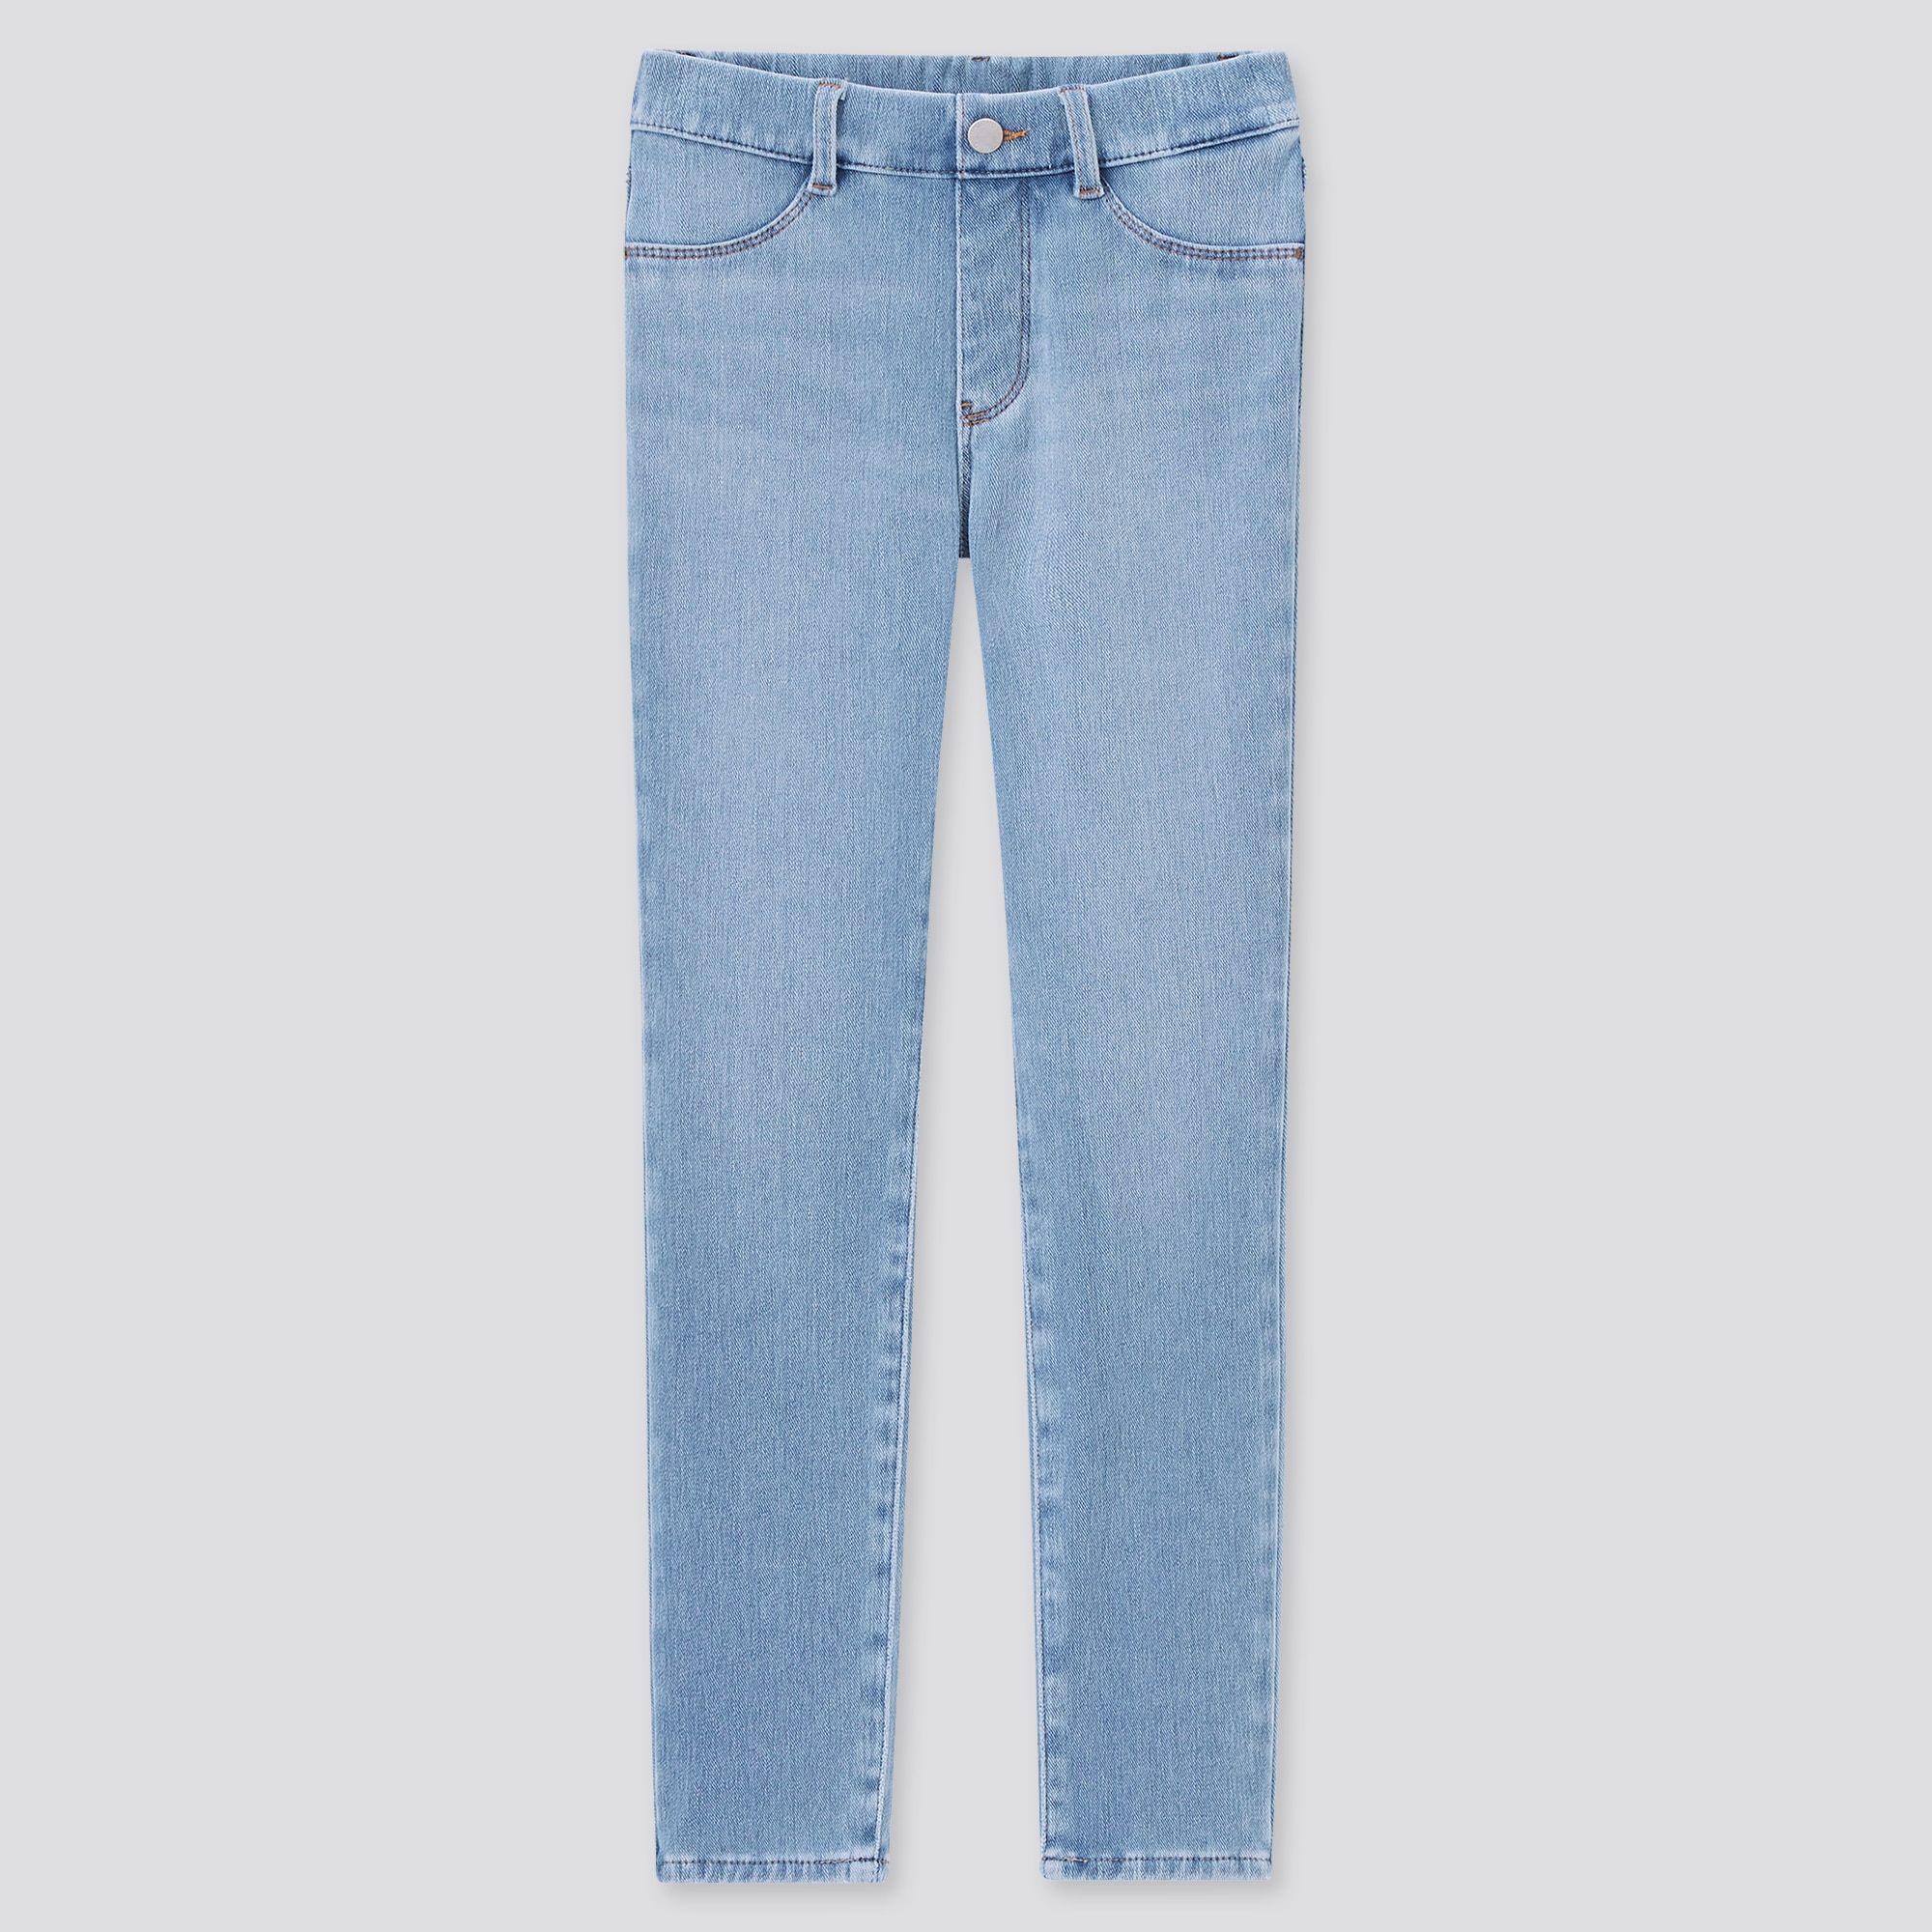 Uniqlo Jeans Women's 10 Blue Skinny Jeggings Denim Stretch Size 10 (26X24)  * 